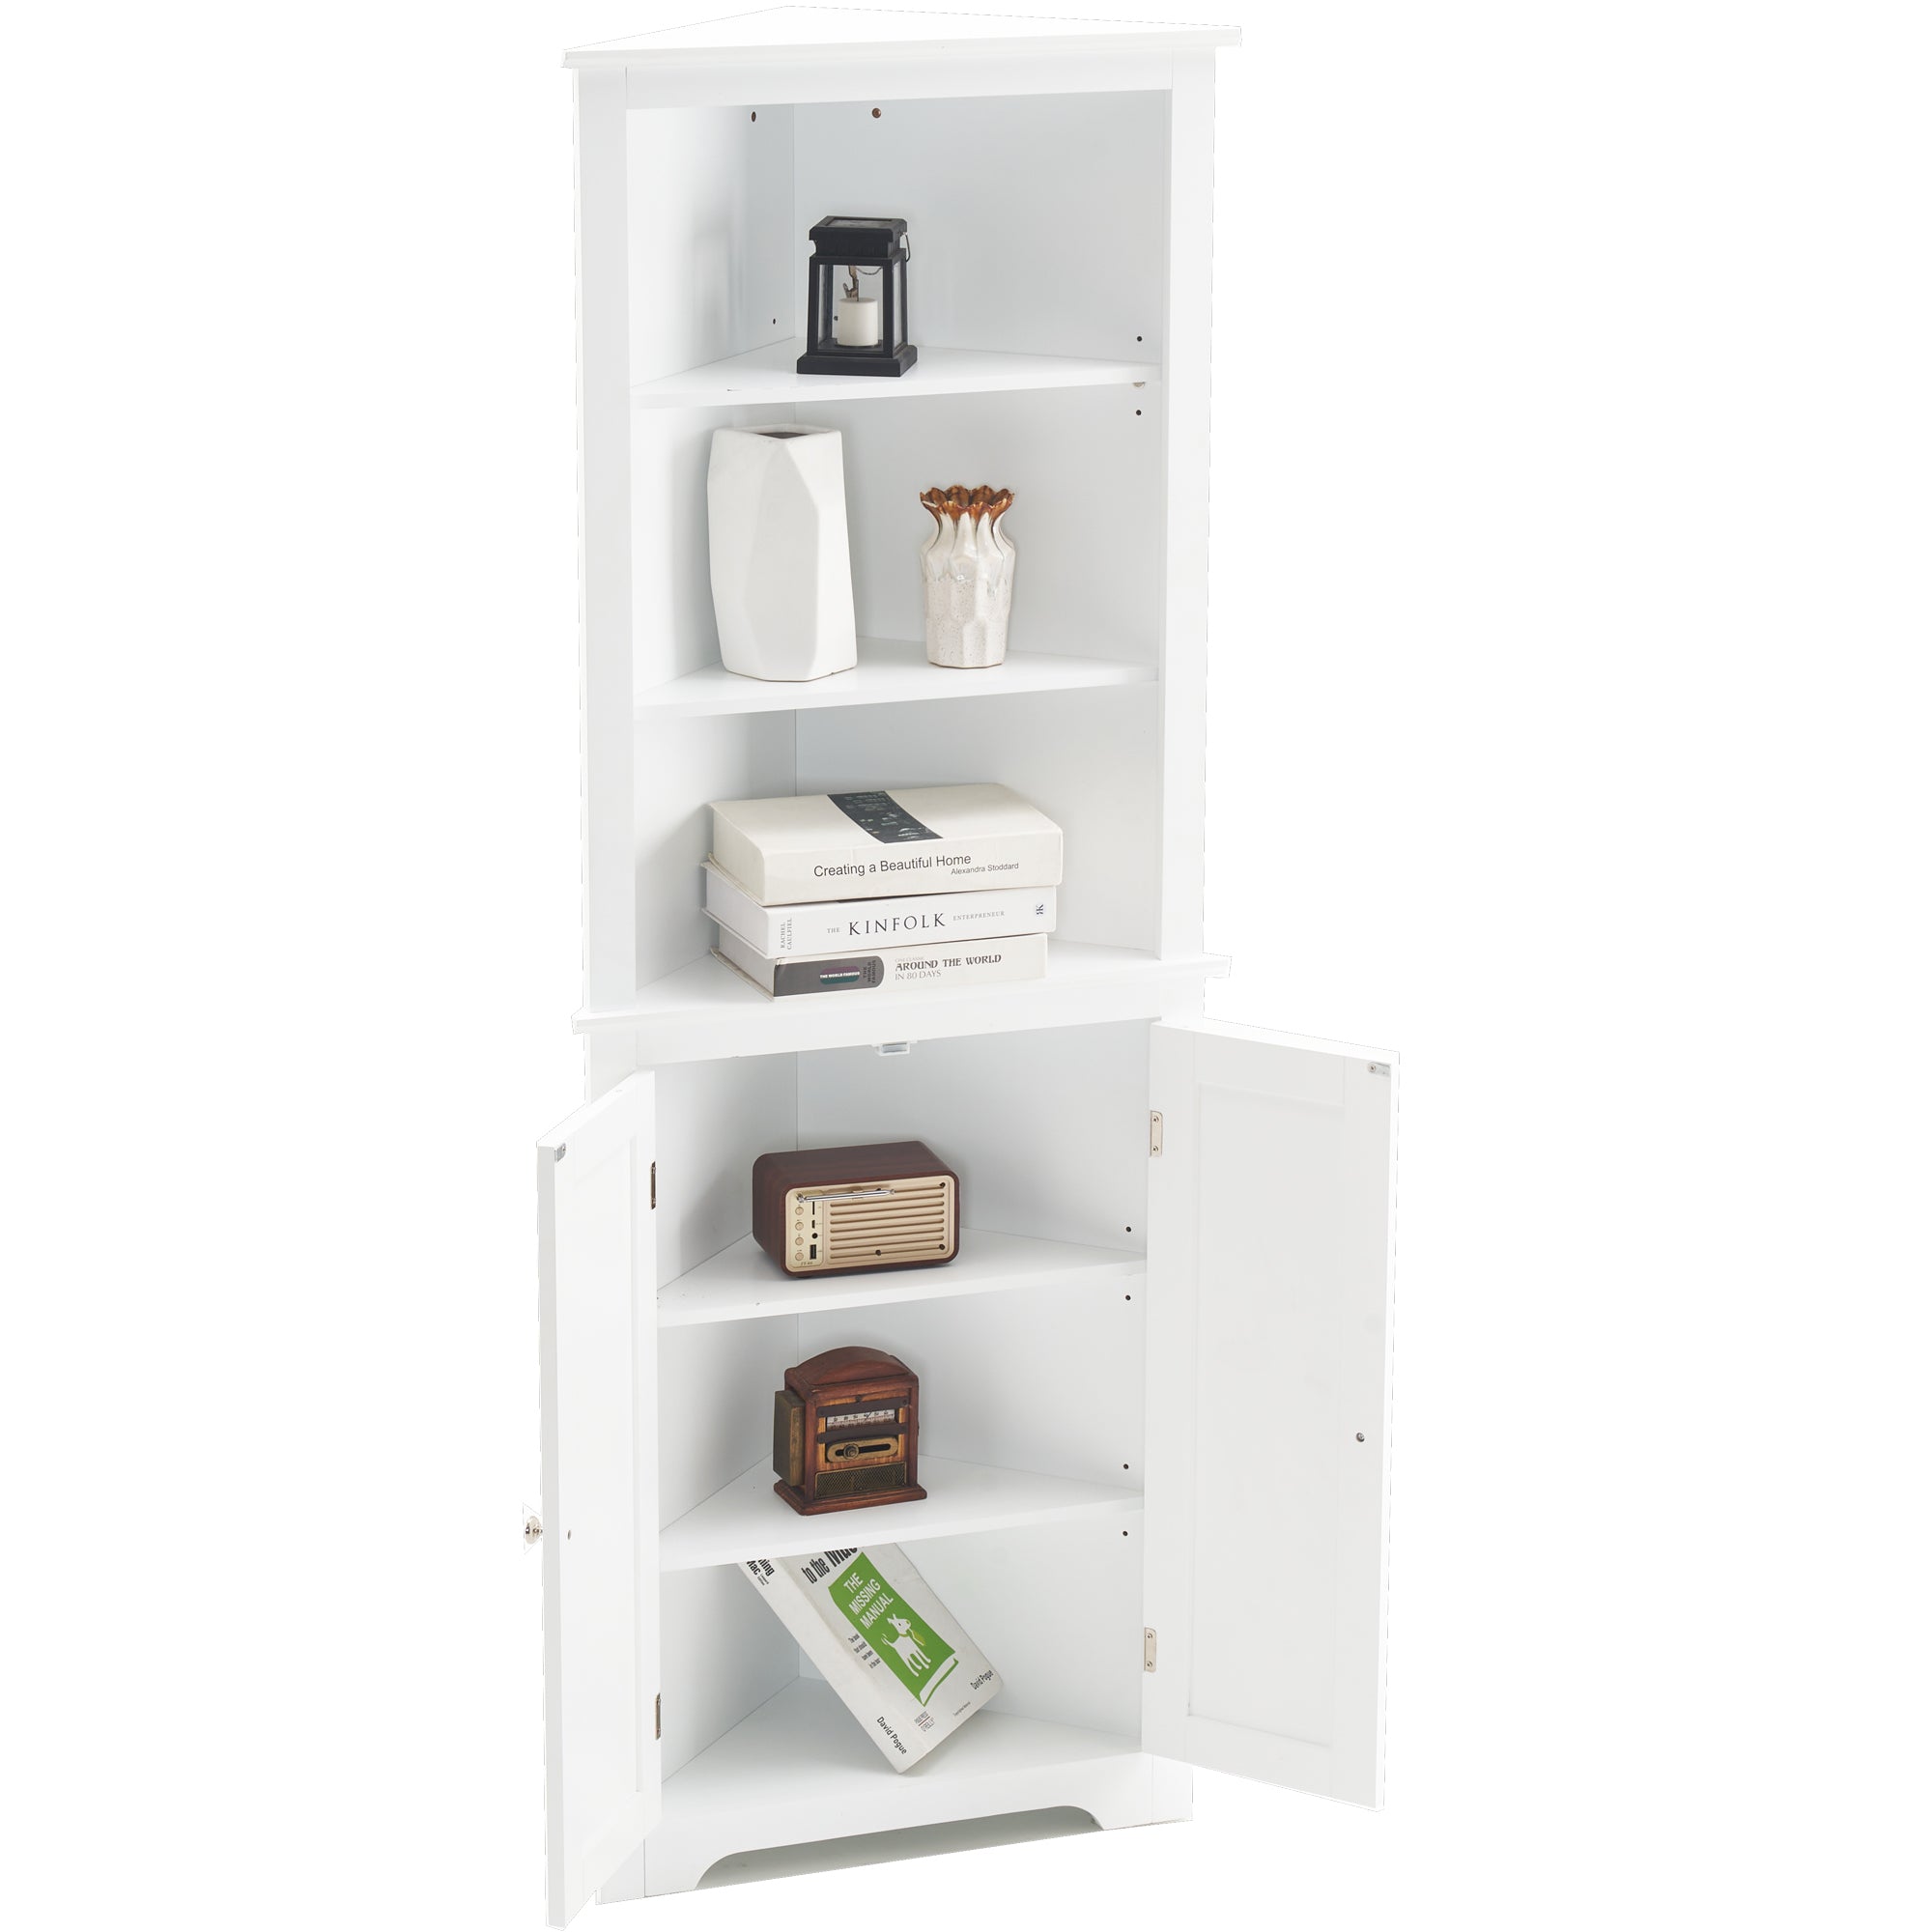 ivinta Tall Corner Cabinet with Two Doors, Adjustable Shelves and Waterproof Design, Free Standing Corner Storage Cabinet for Bathroom, Living Room, Kitchen or Bedroom